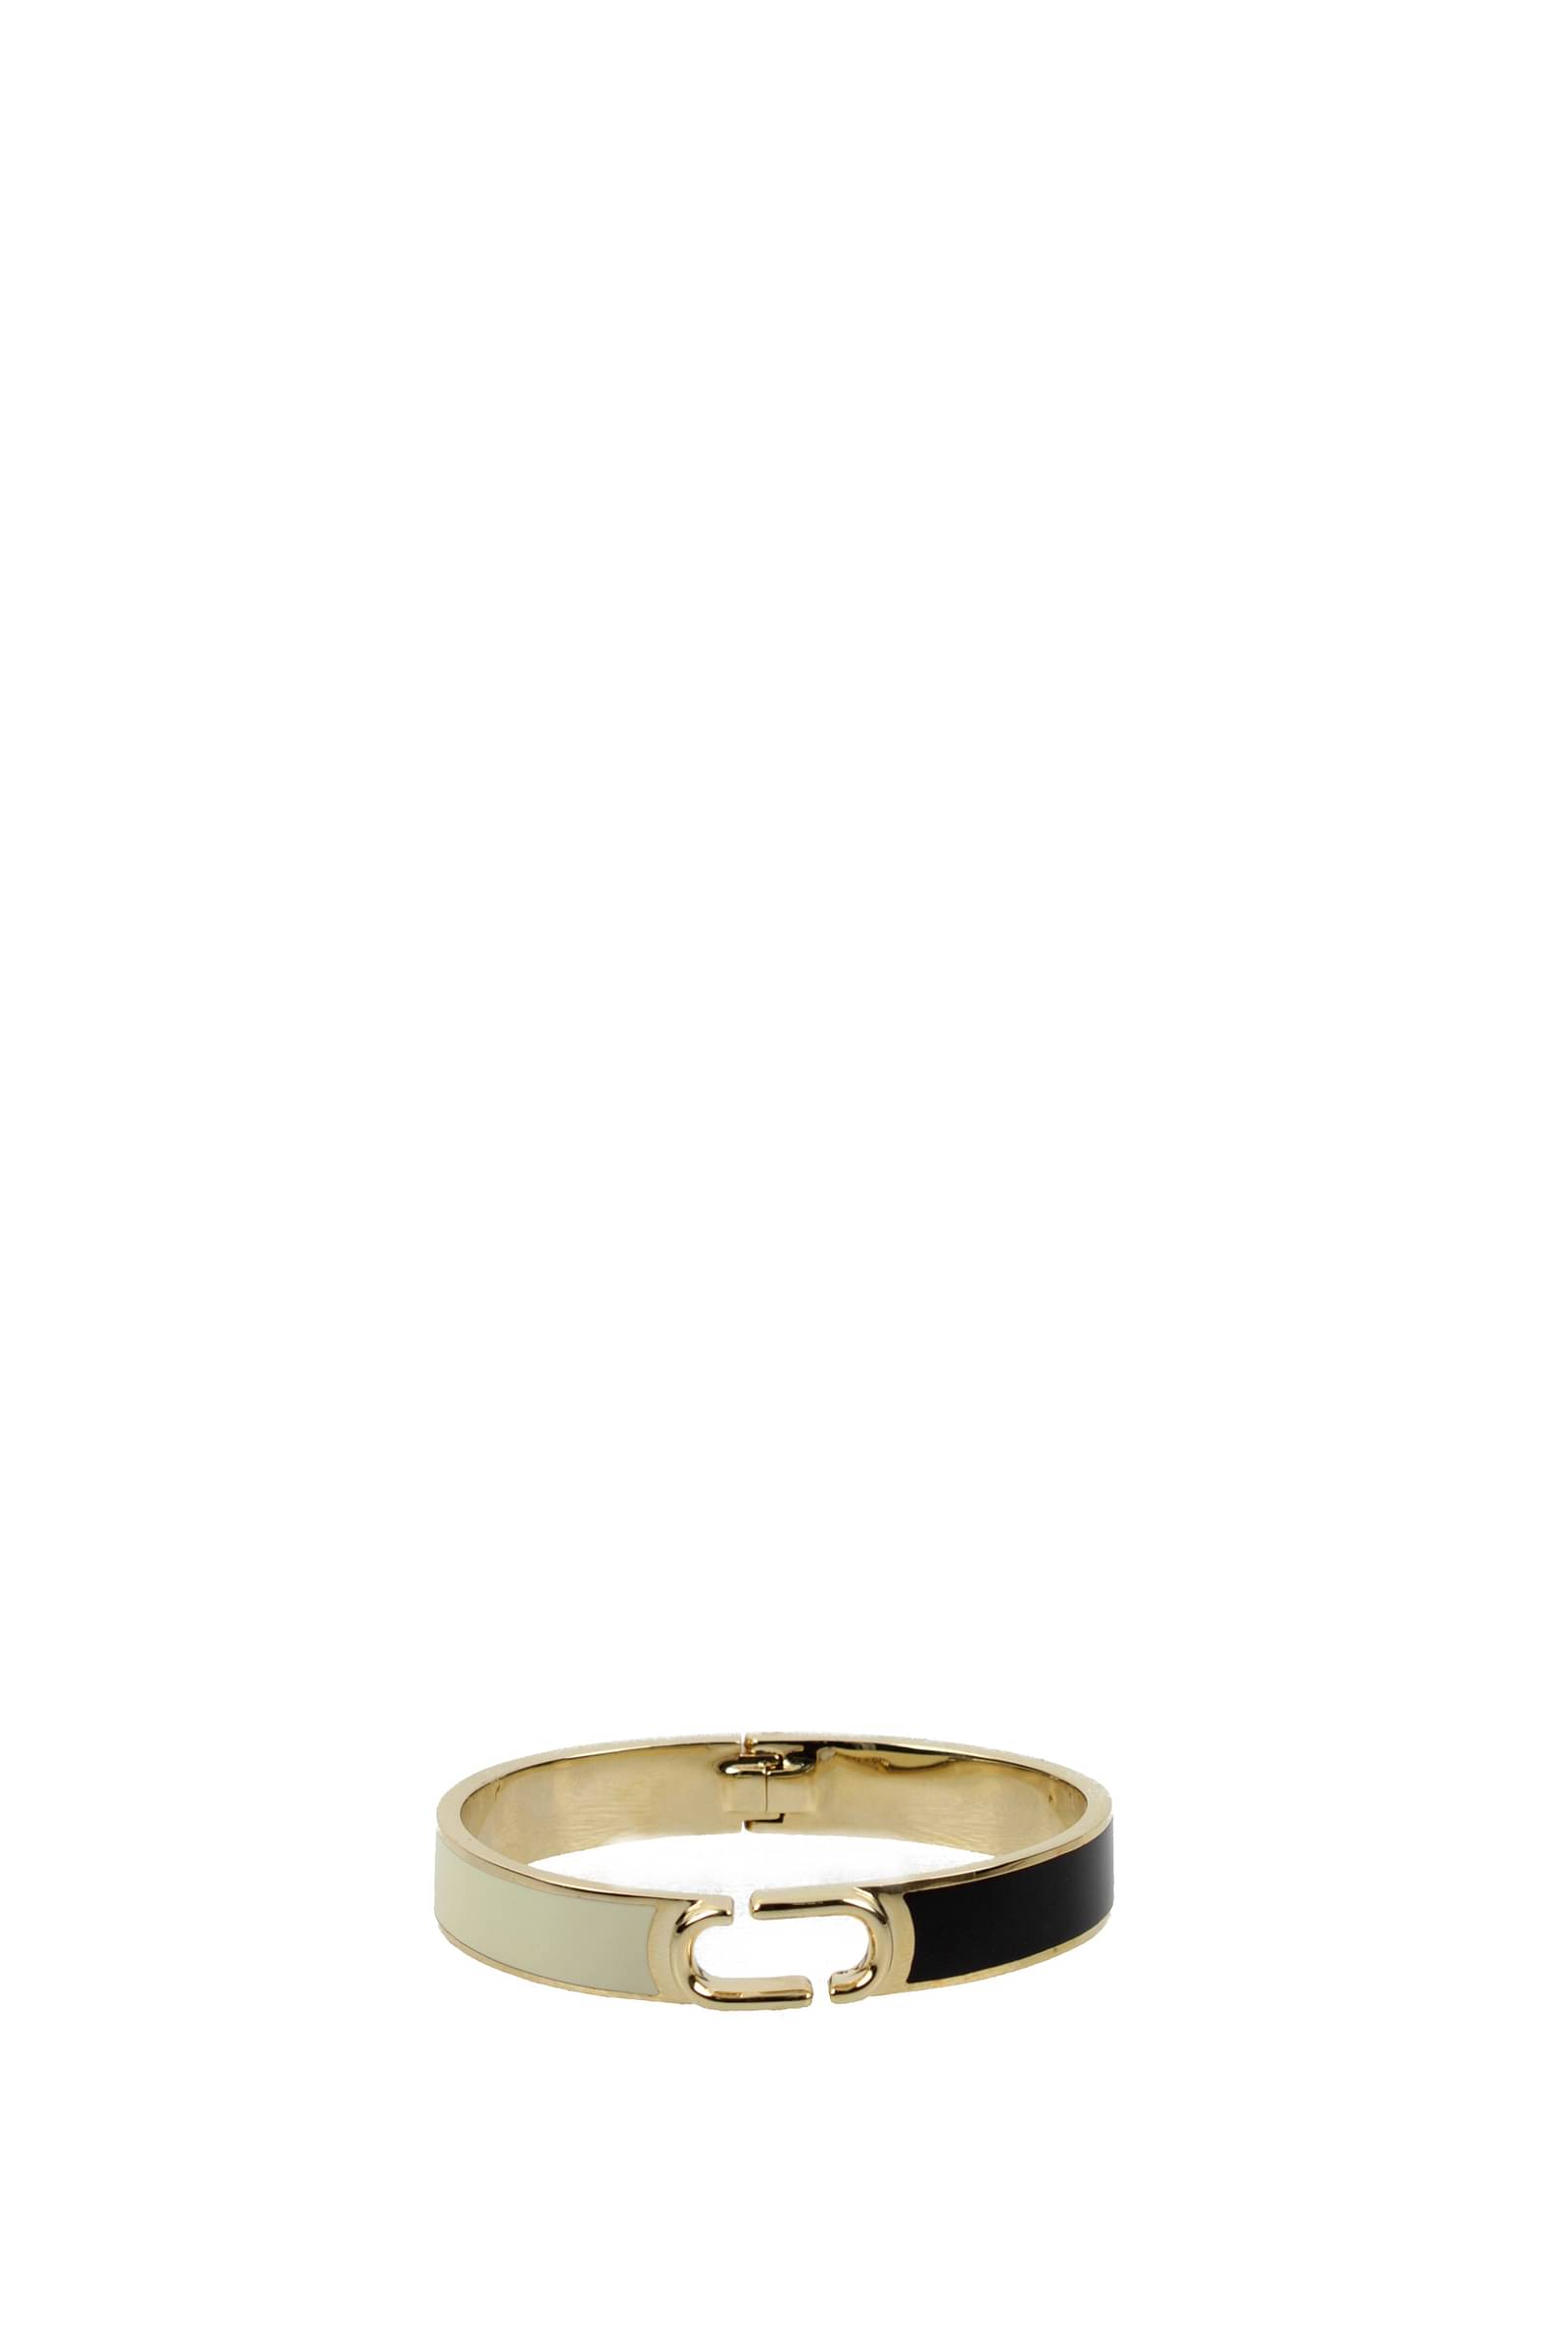 Marc Jacobs The Medallion Logo Detailed Bracelet | italist, ALWAYS LIKE A  SALE